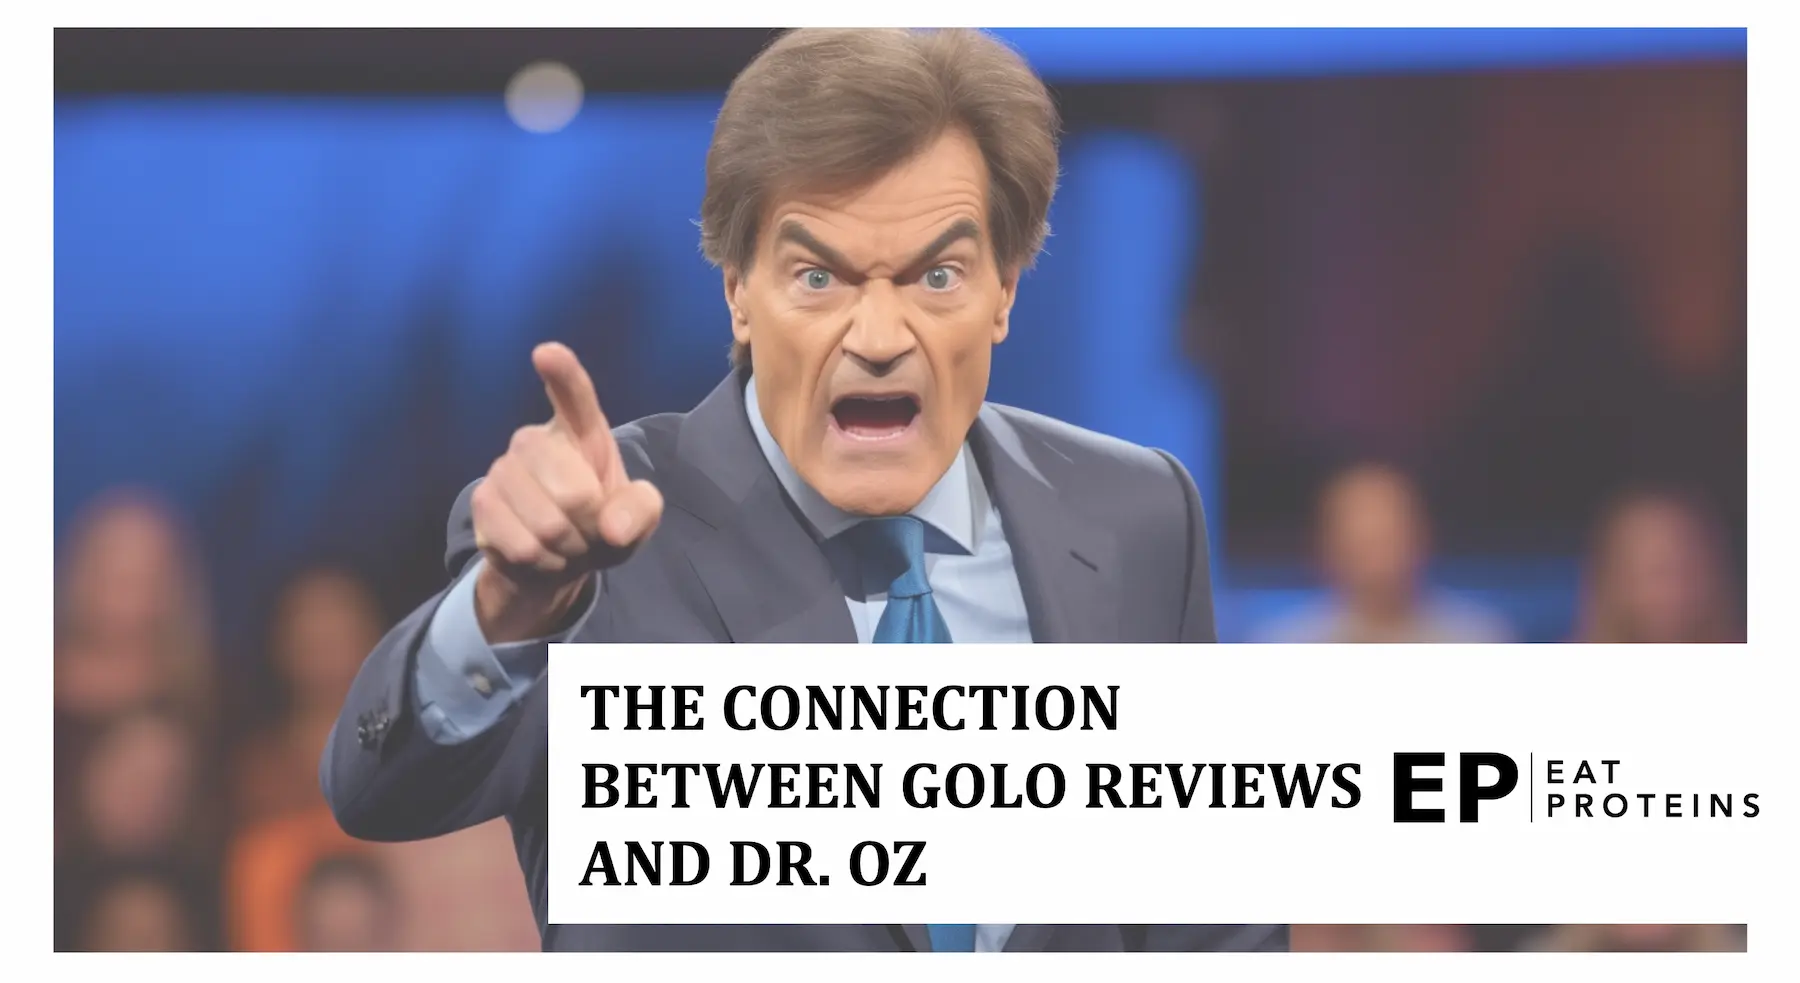 Dr. Oz reviews on GOLO diet